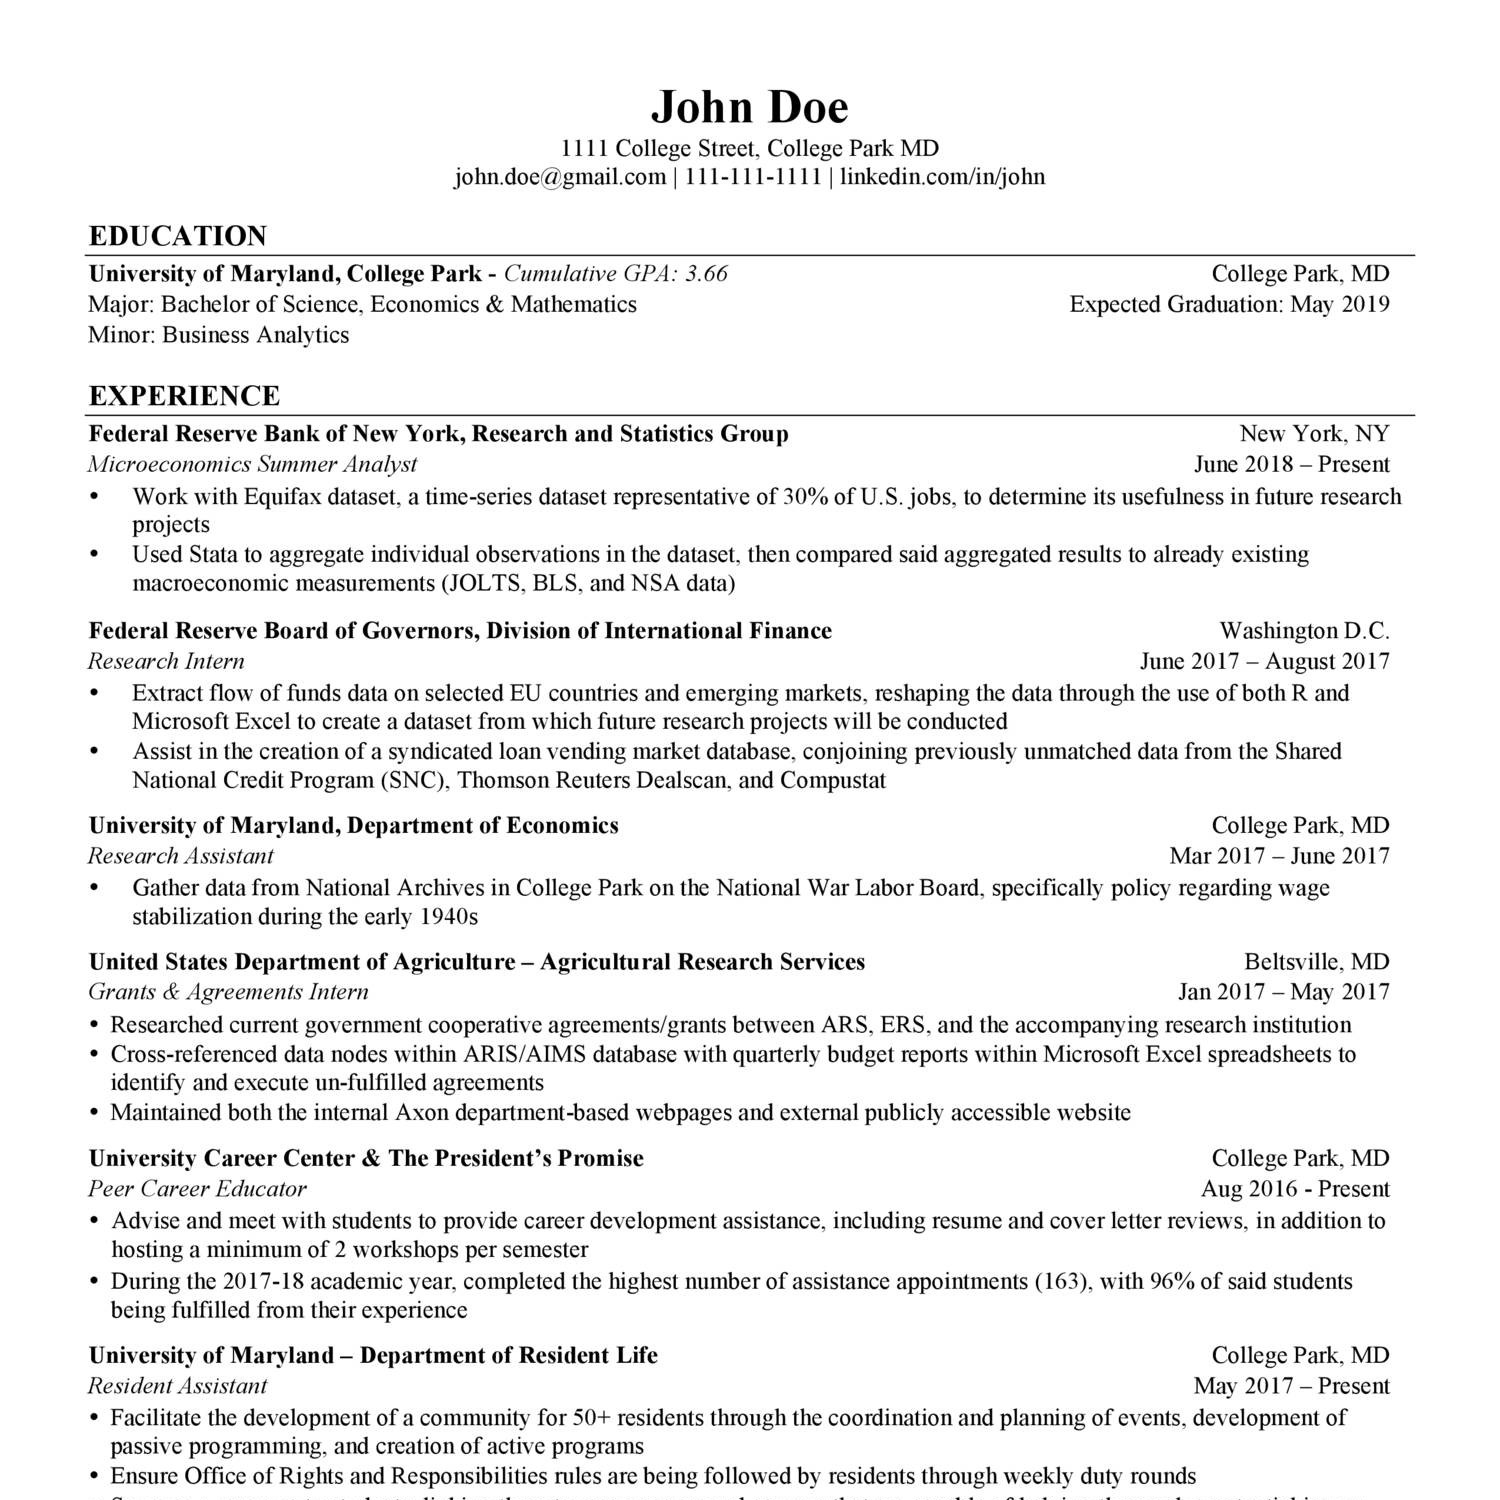 John Doe Resume.pdf DocDroid